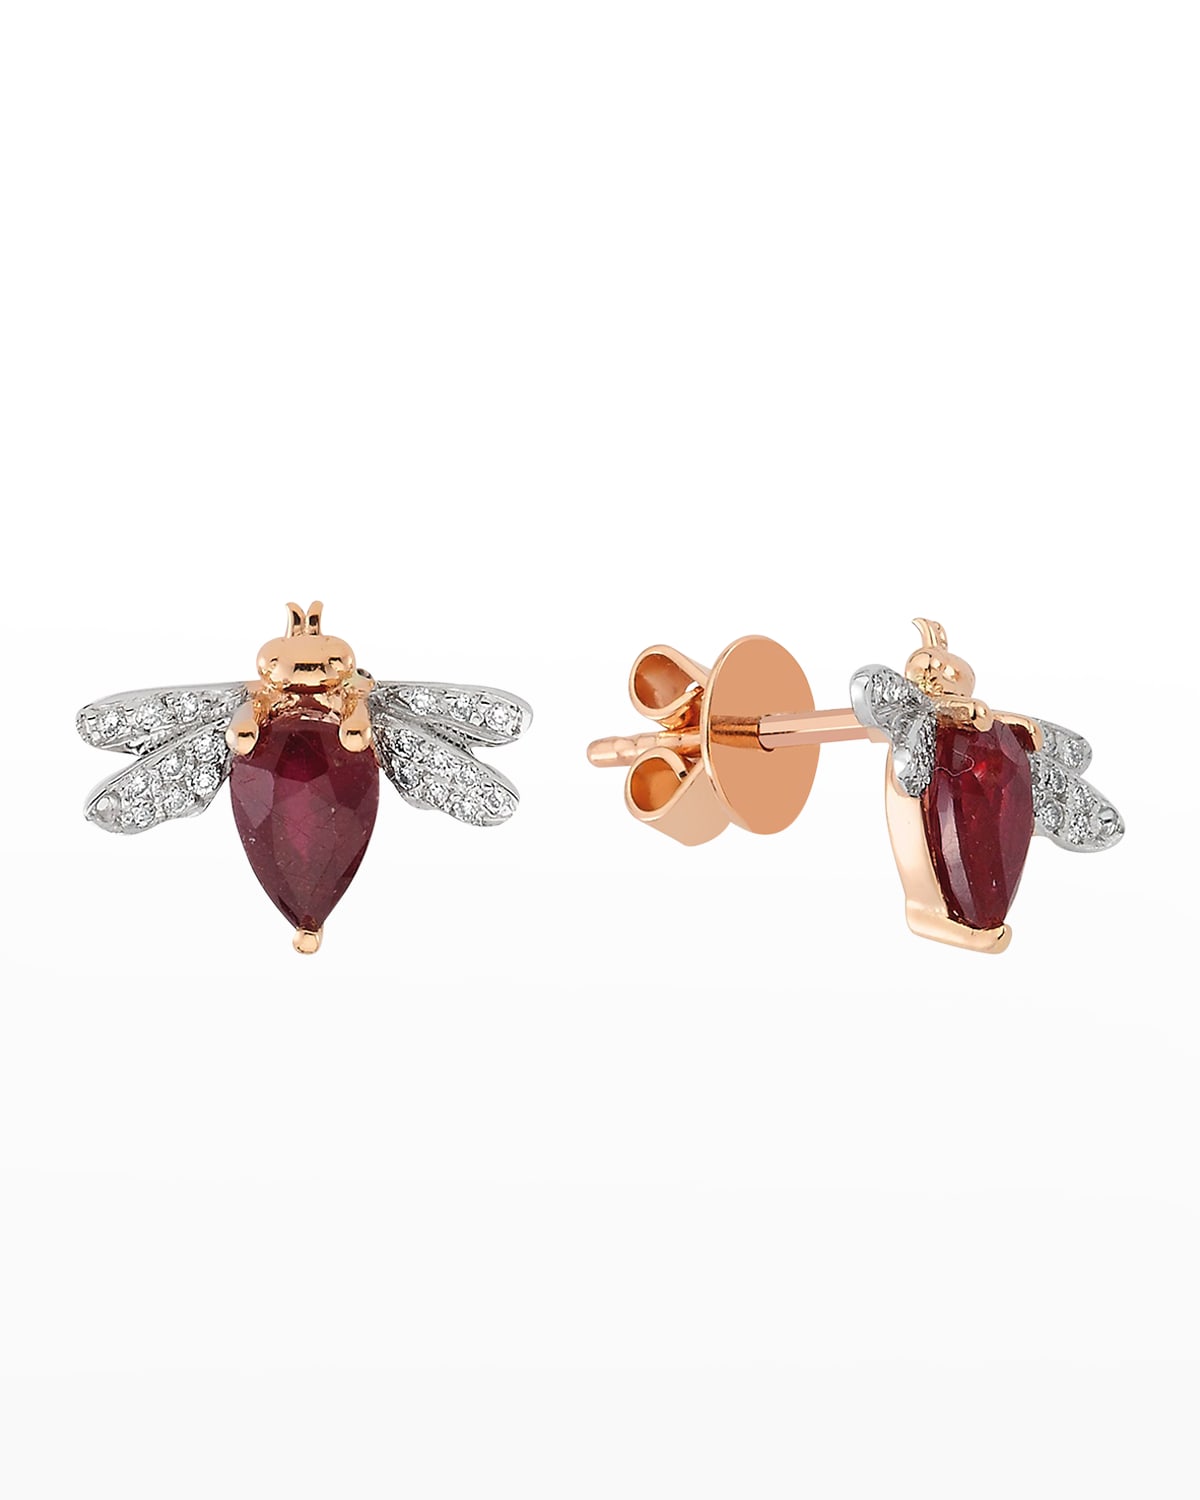 BeeGoddess Diamond and Ruby Bee Earrings